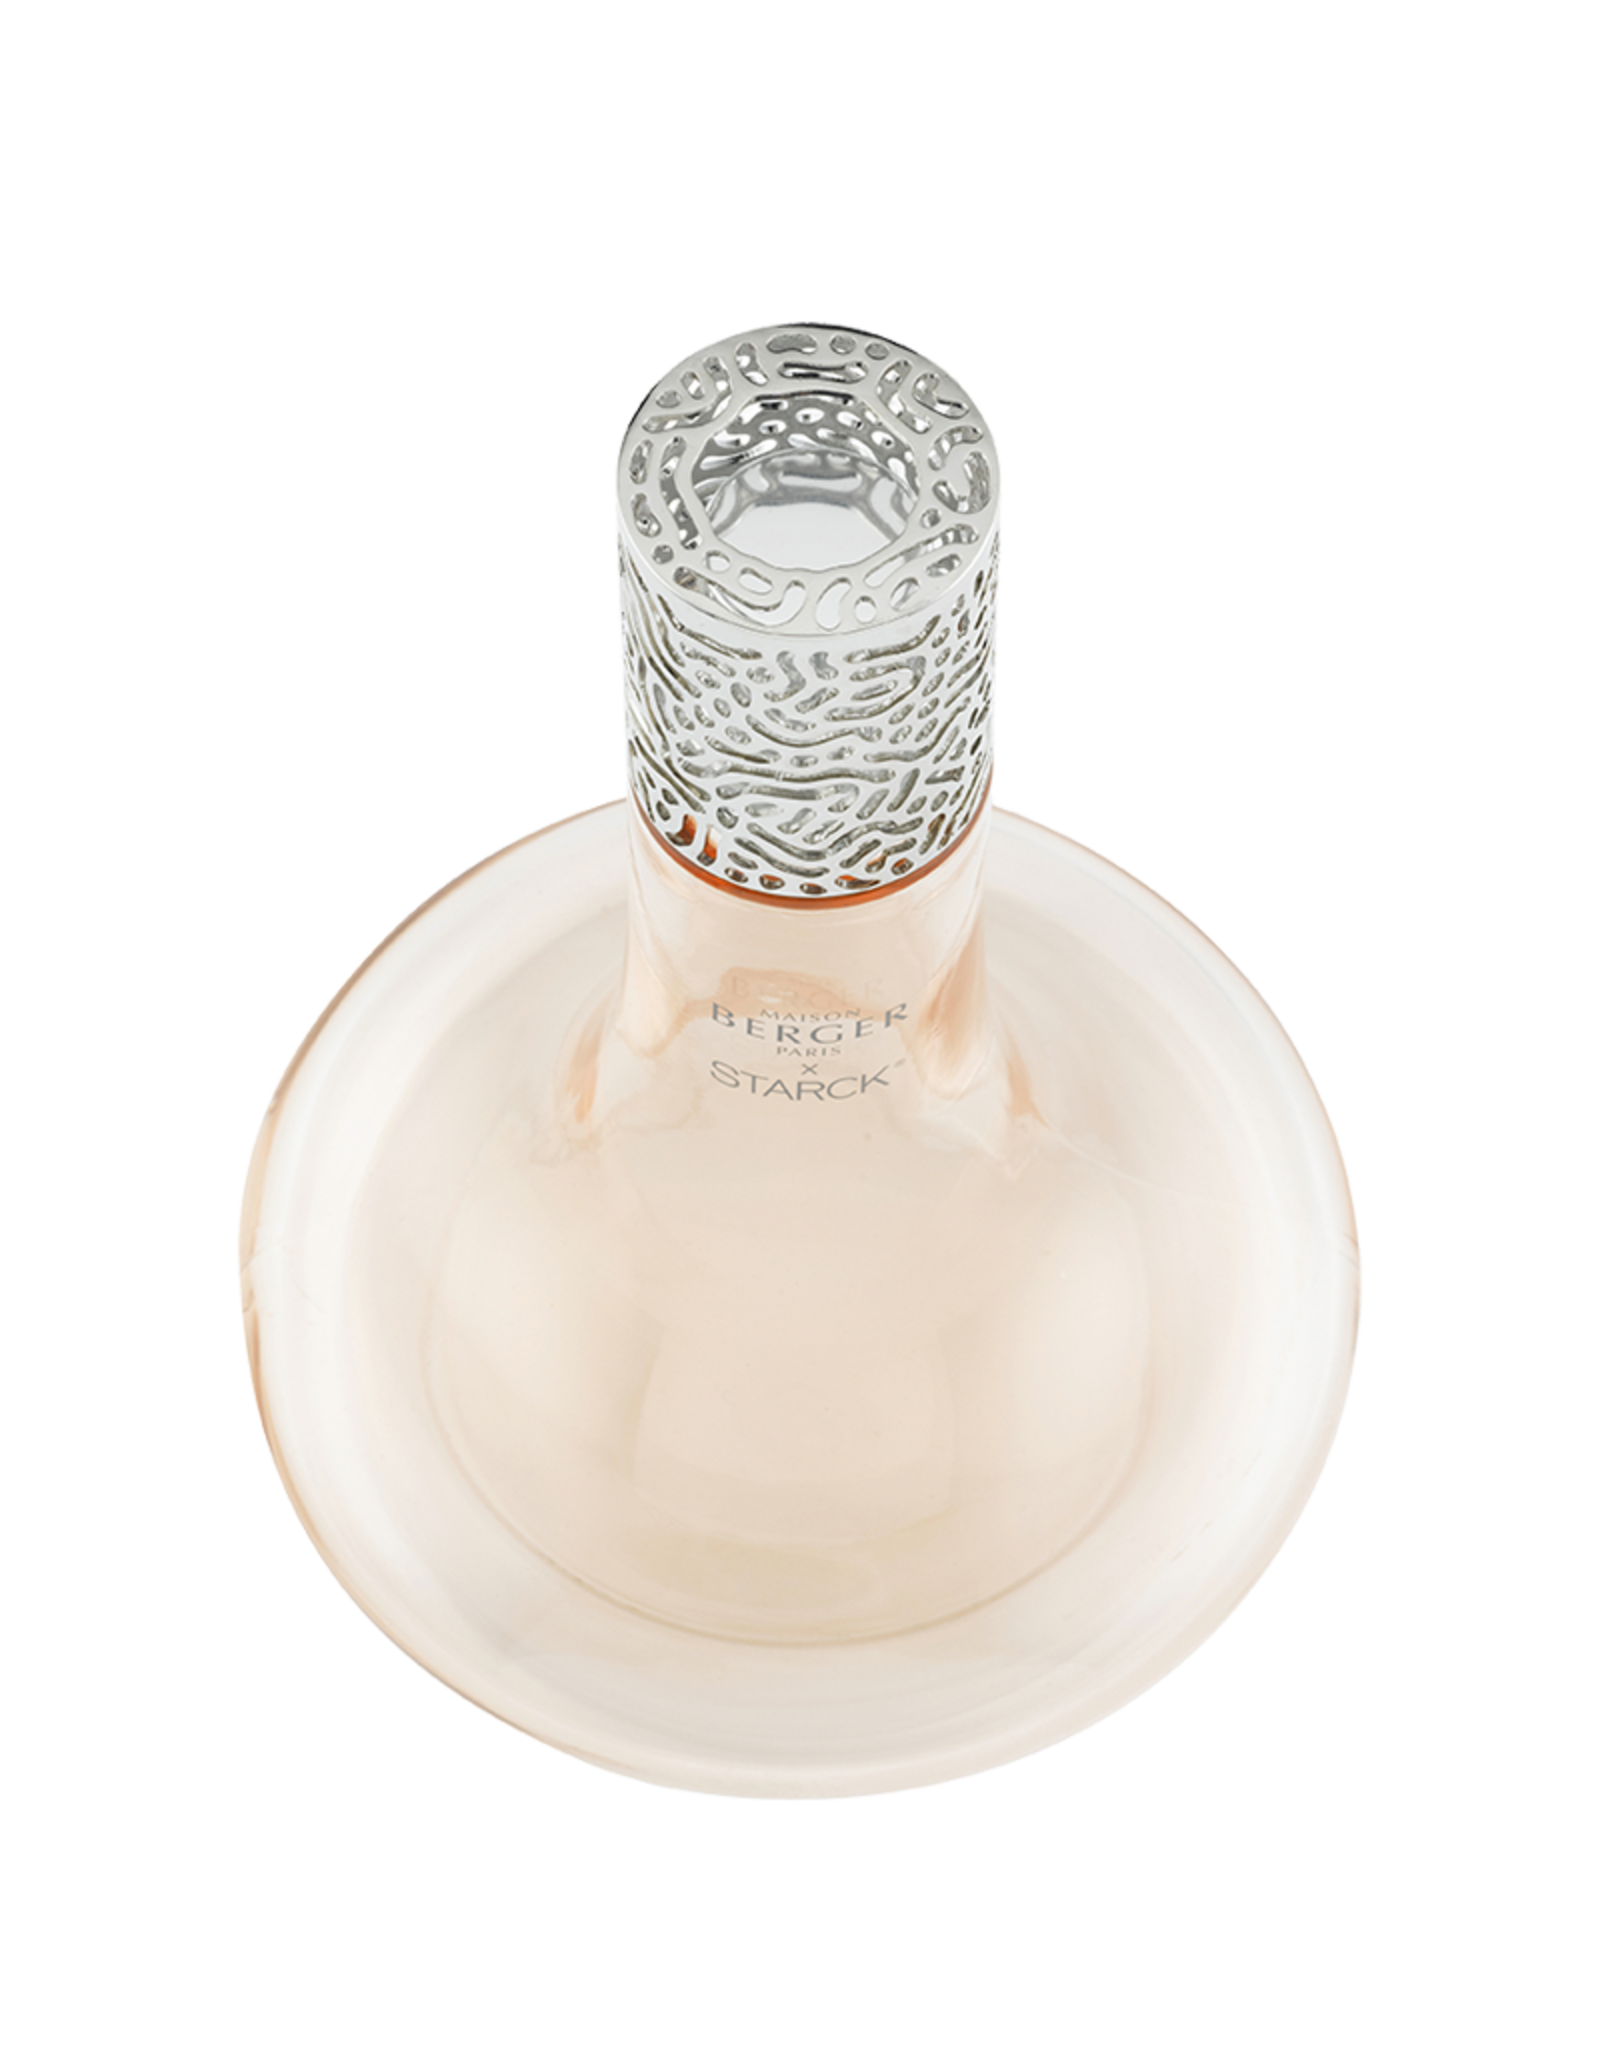 Lampe Berger Starck Rose Home Fragrance Lamp Gift Set | Maison Berger